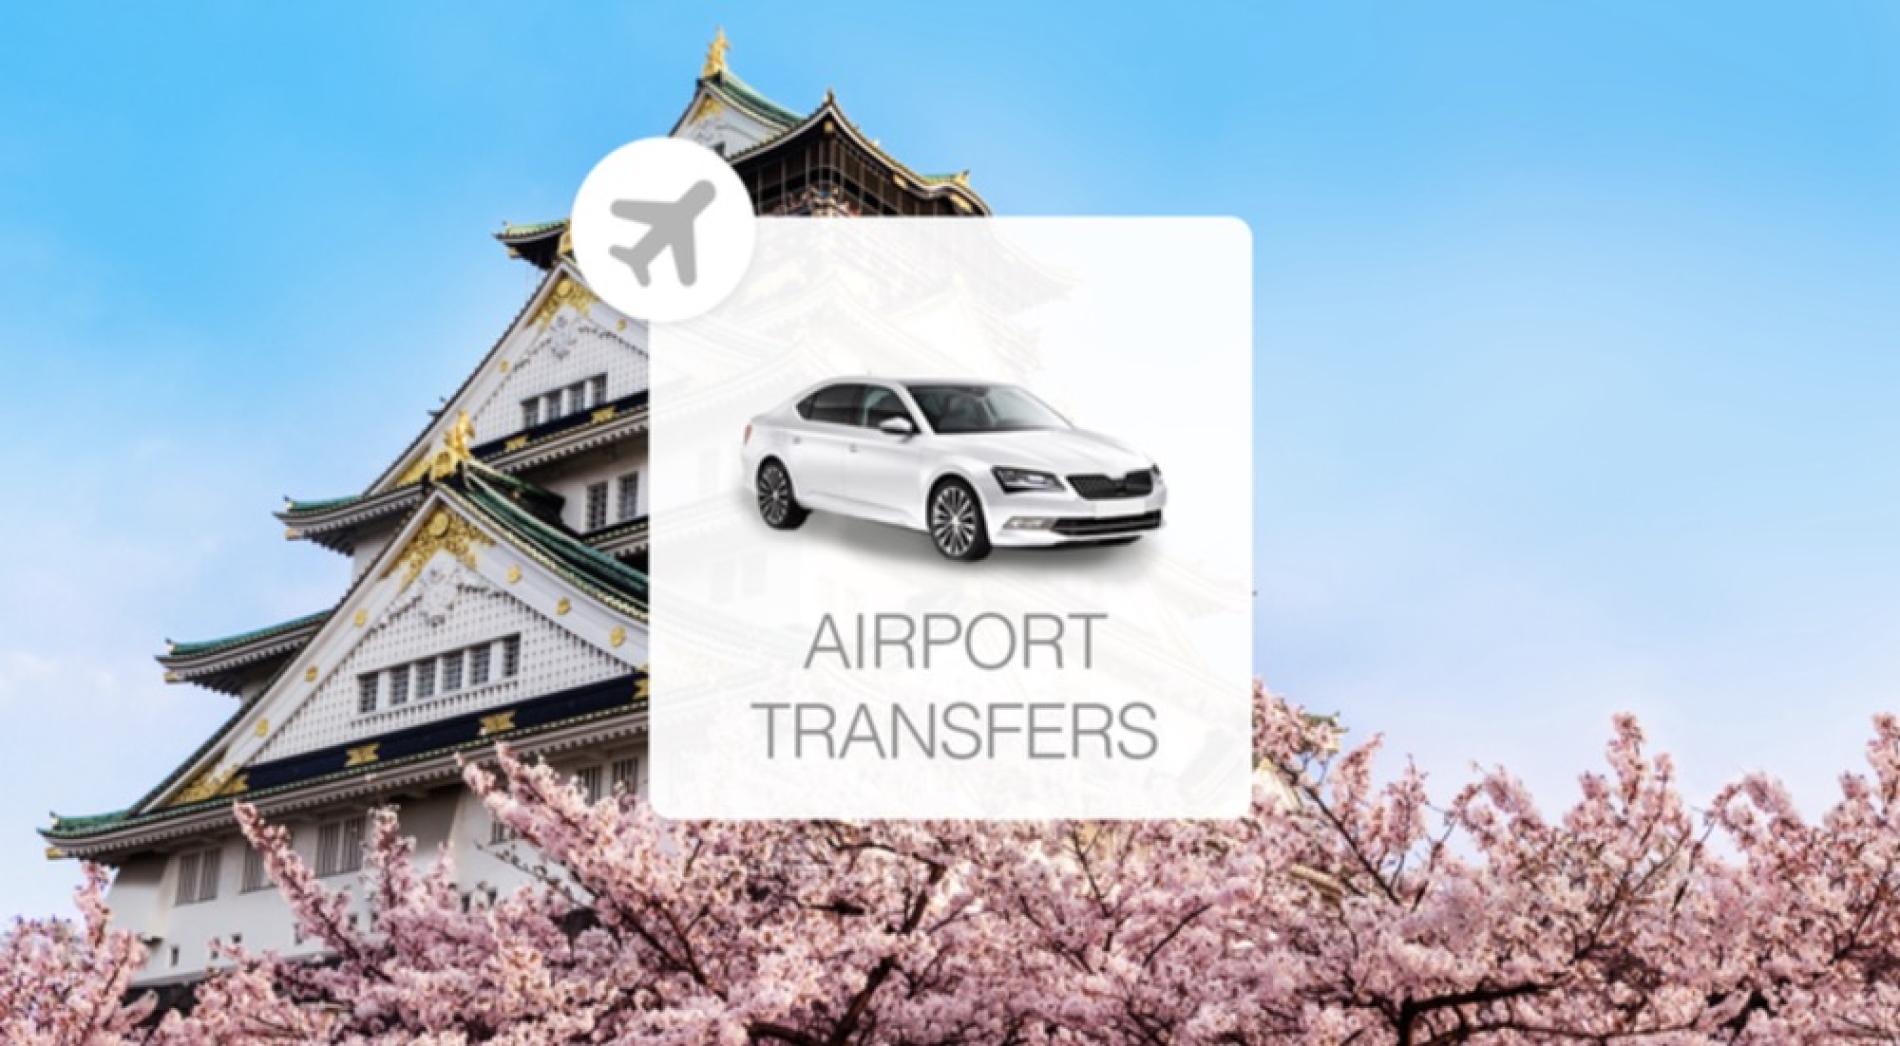 Kansai Airport (Kix) Private Transfer To Osaka/Kyoto/Nara/Kobe/Nagoya -  Kkday